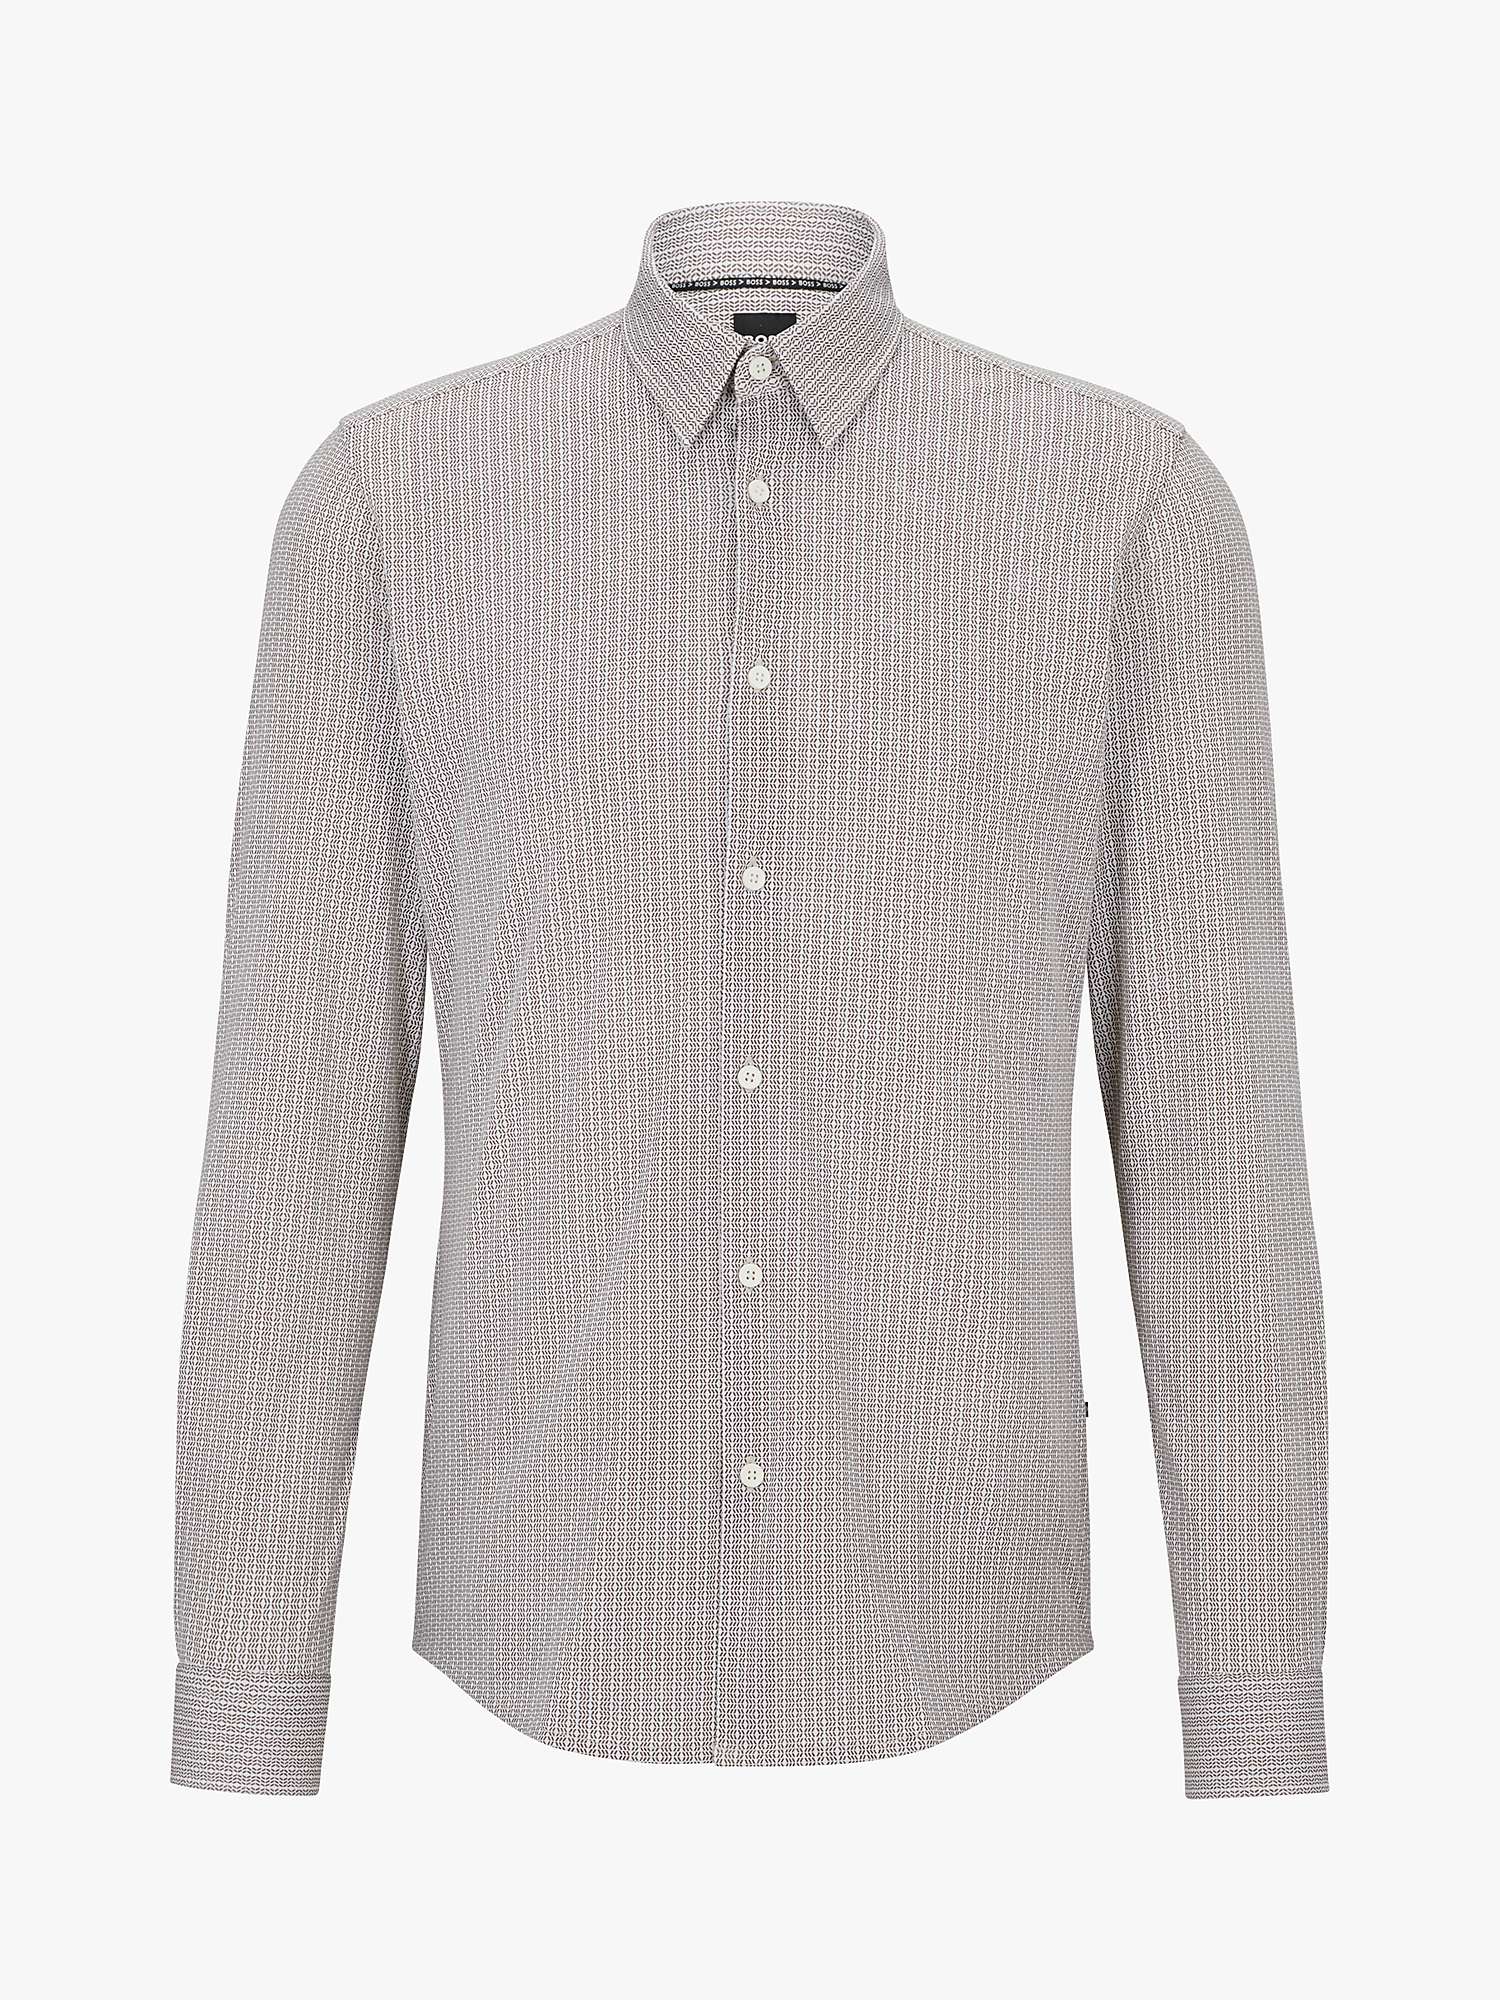 Buy BOSS Roan Kent Striped Slim Fit Shirt, Open Green Online at johnlewis.com